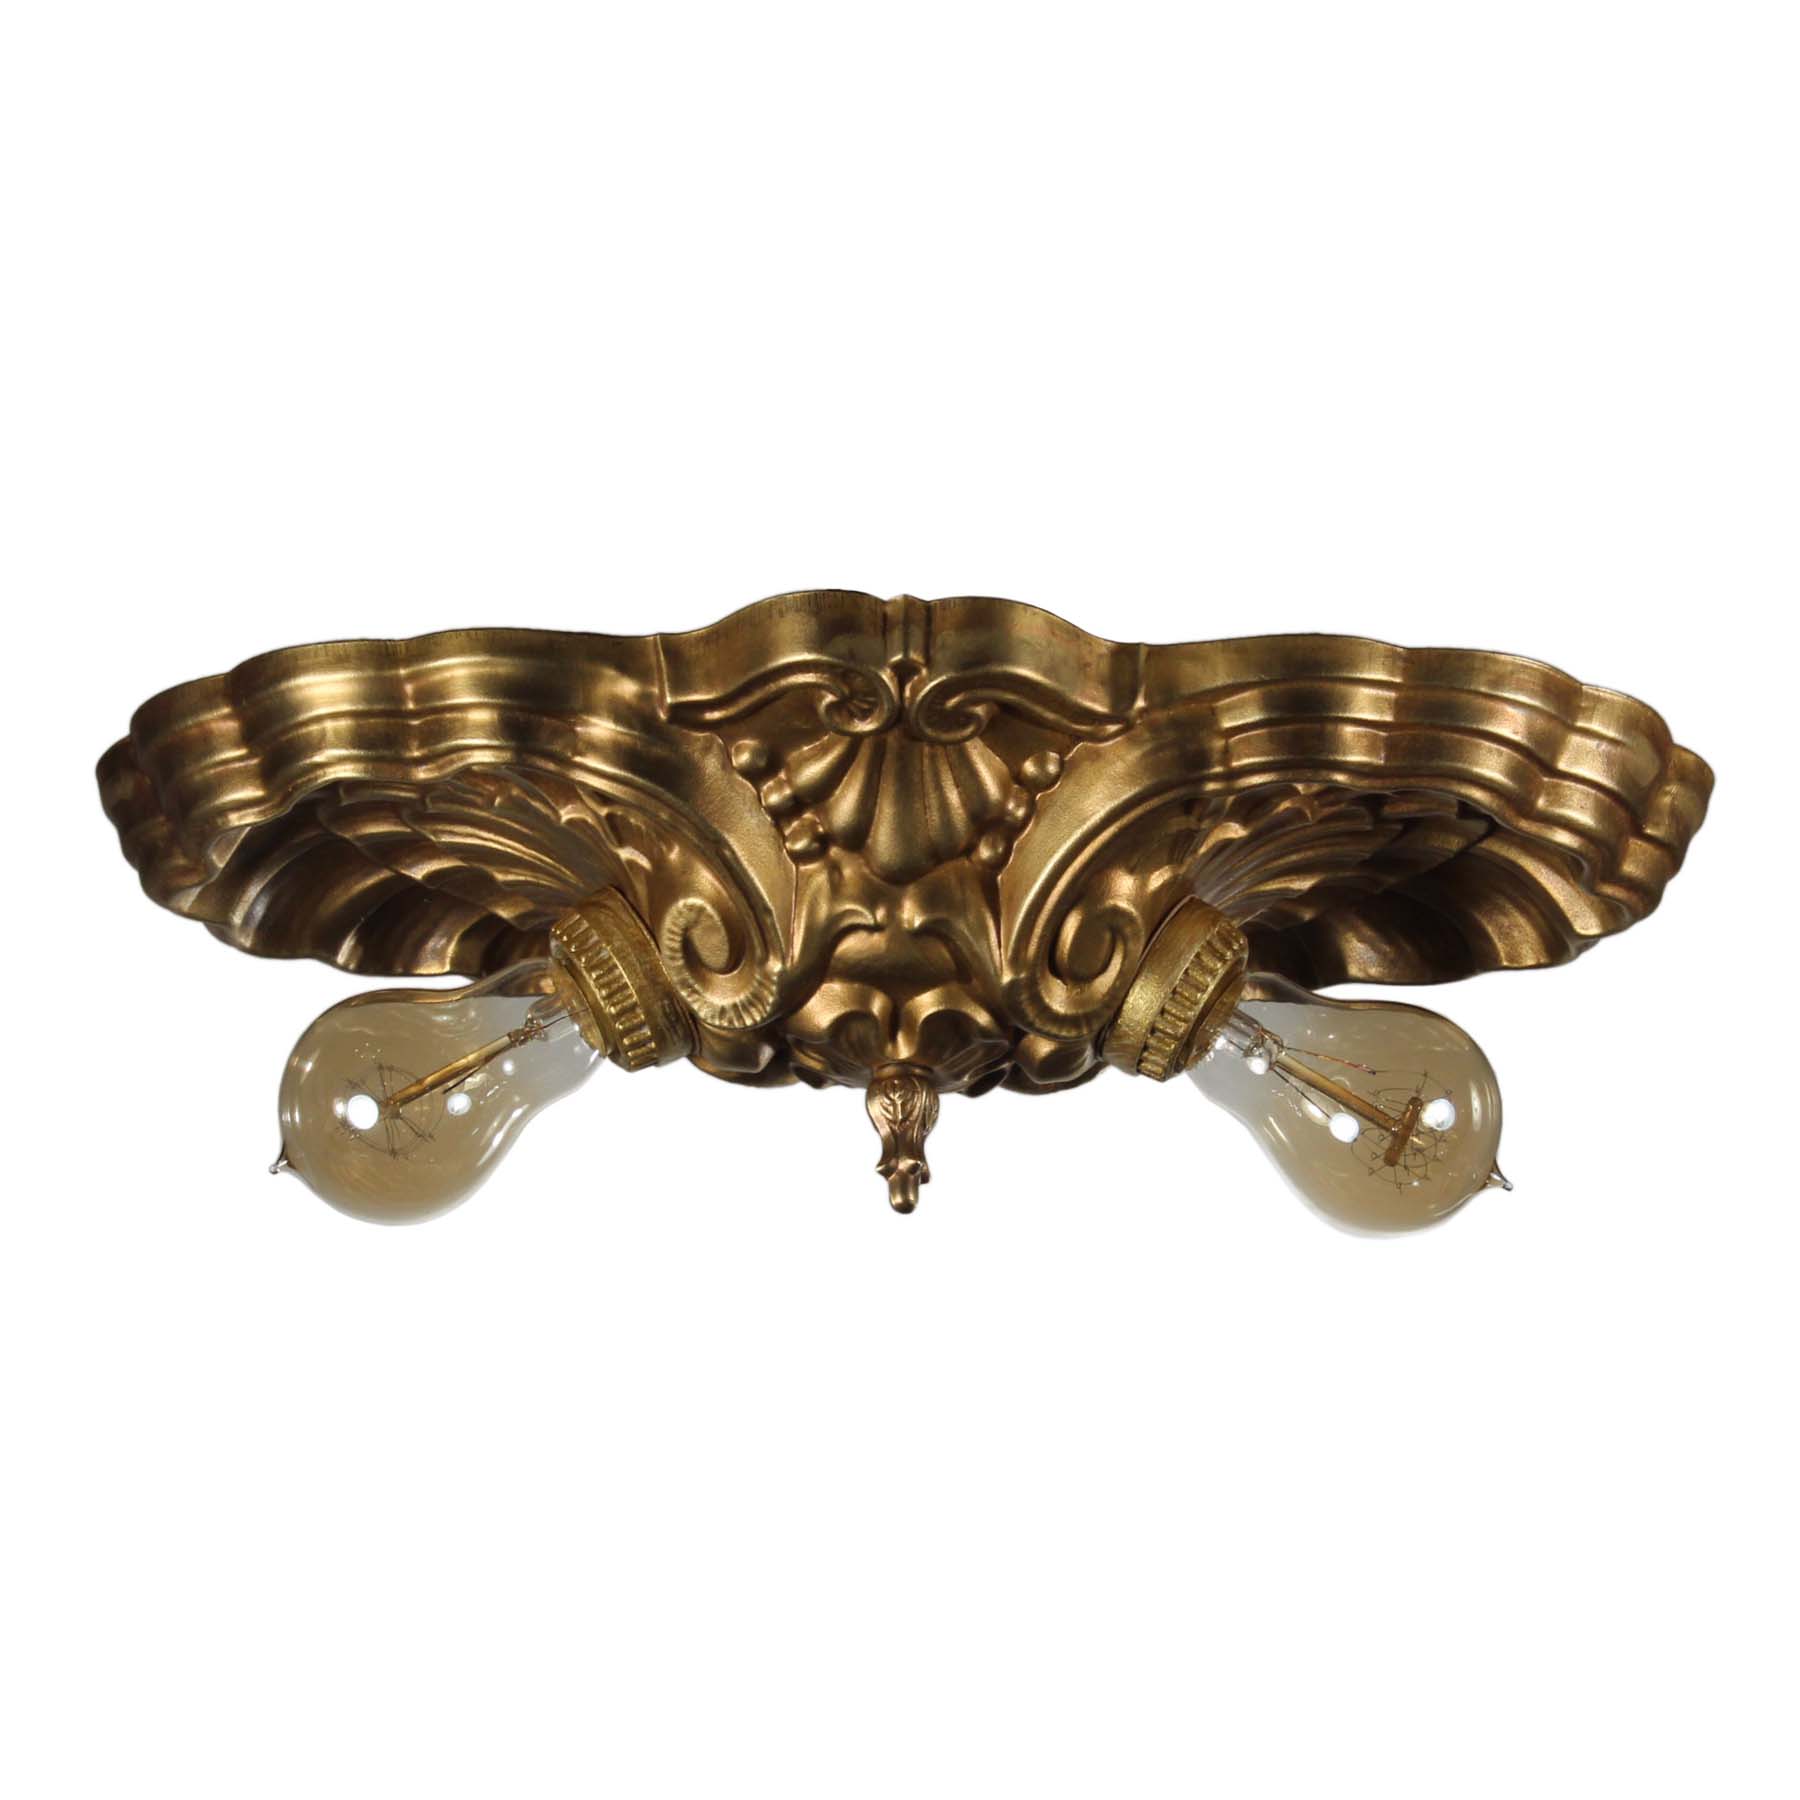 Original antique pressed brass furniture mount light lamp part fitting T26 